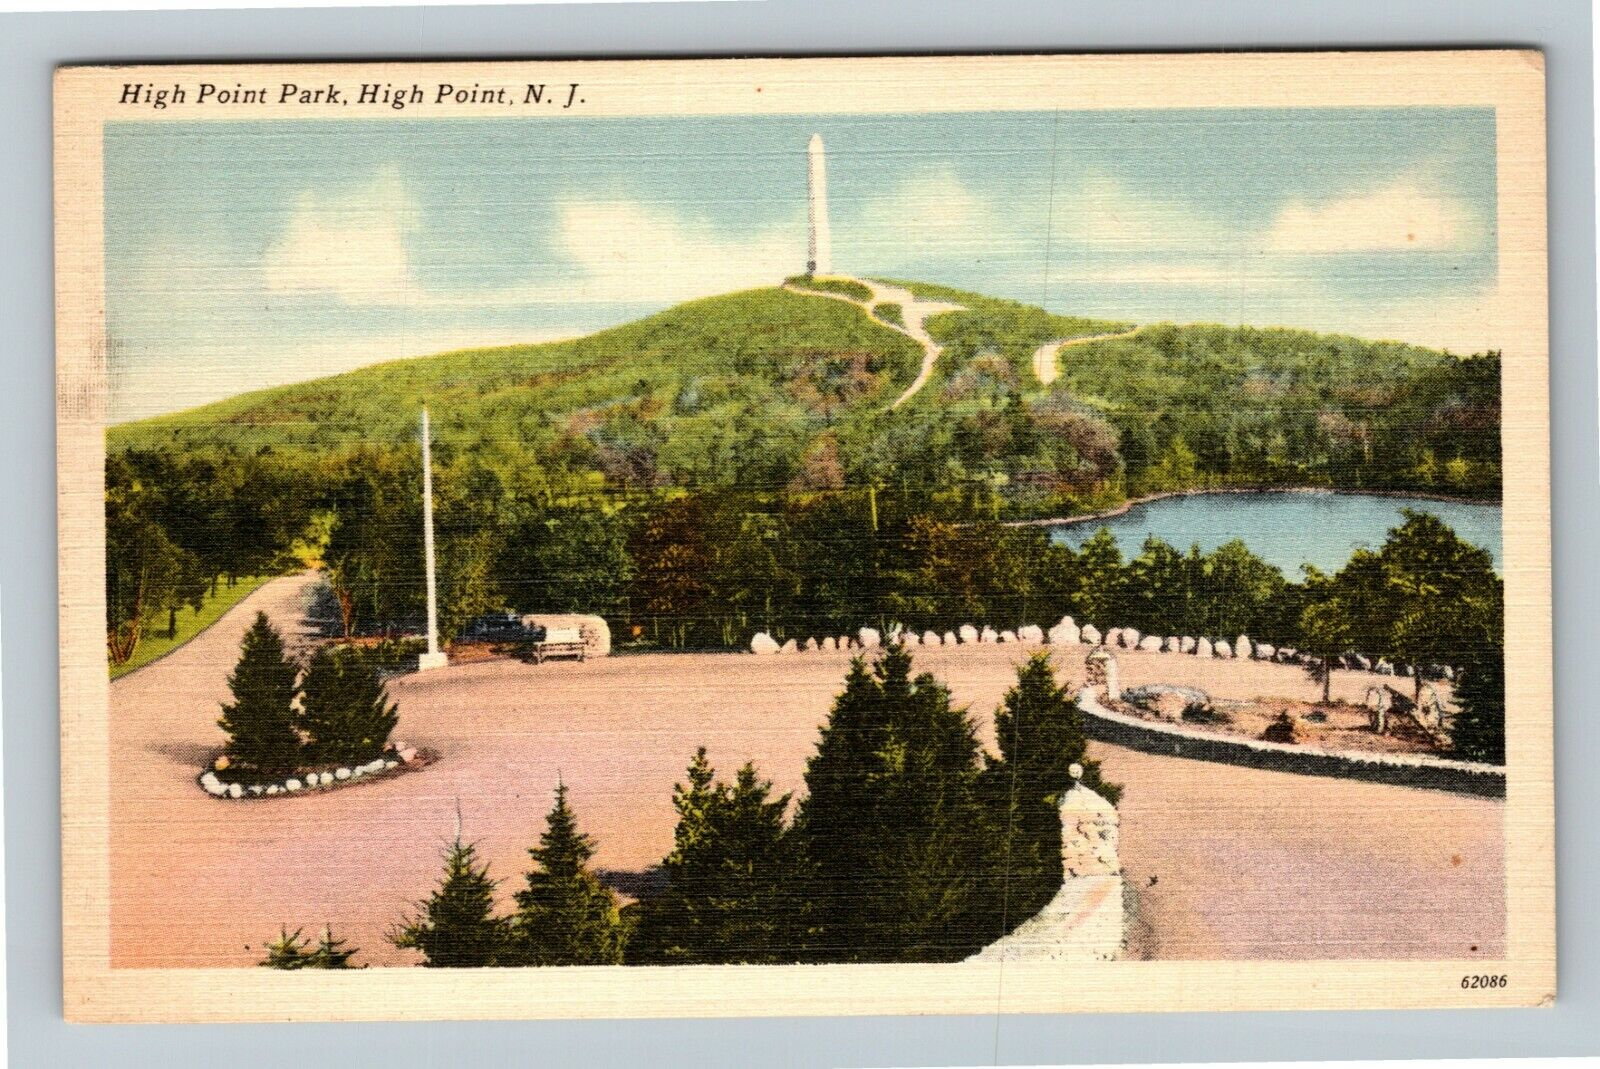 High Point NJ-New Jersey, High Point Park Vintage Souvenir Postcard